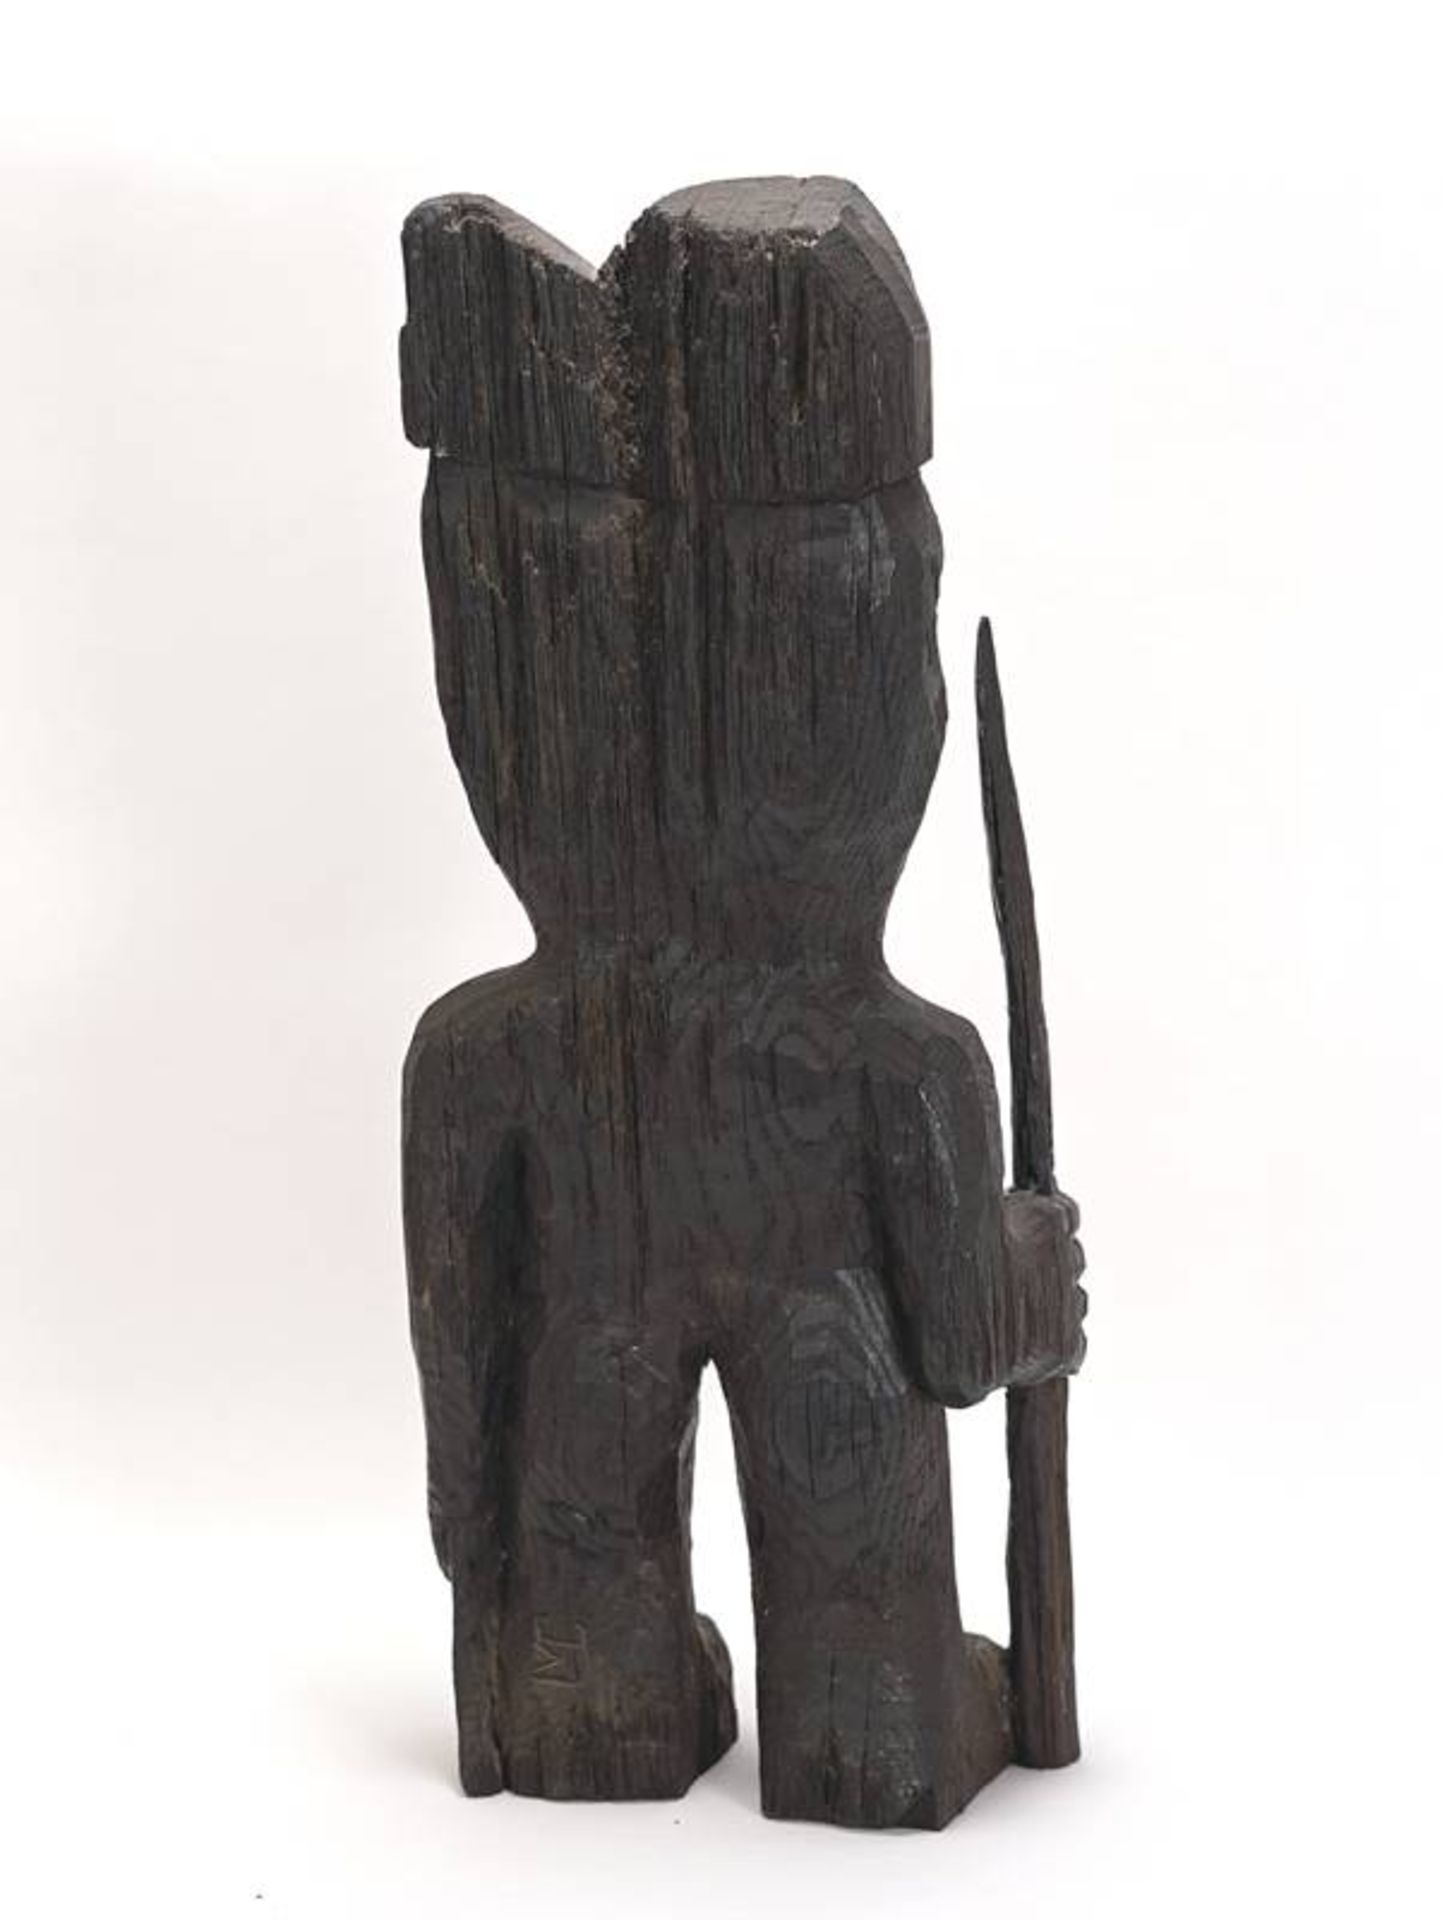 Wooden figure - Image 2 of 4